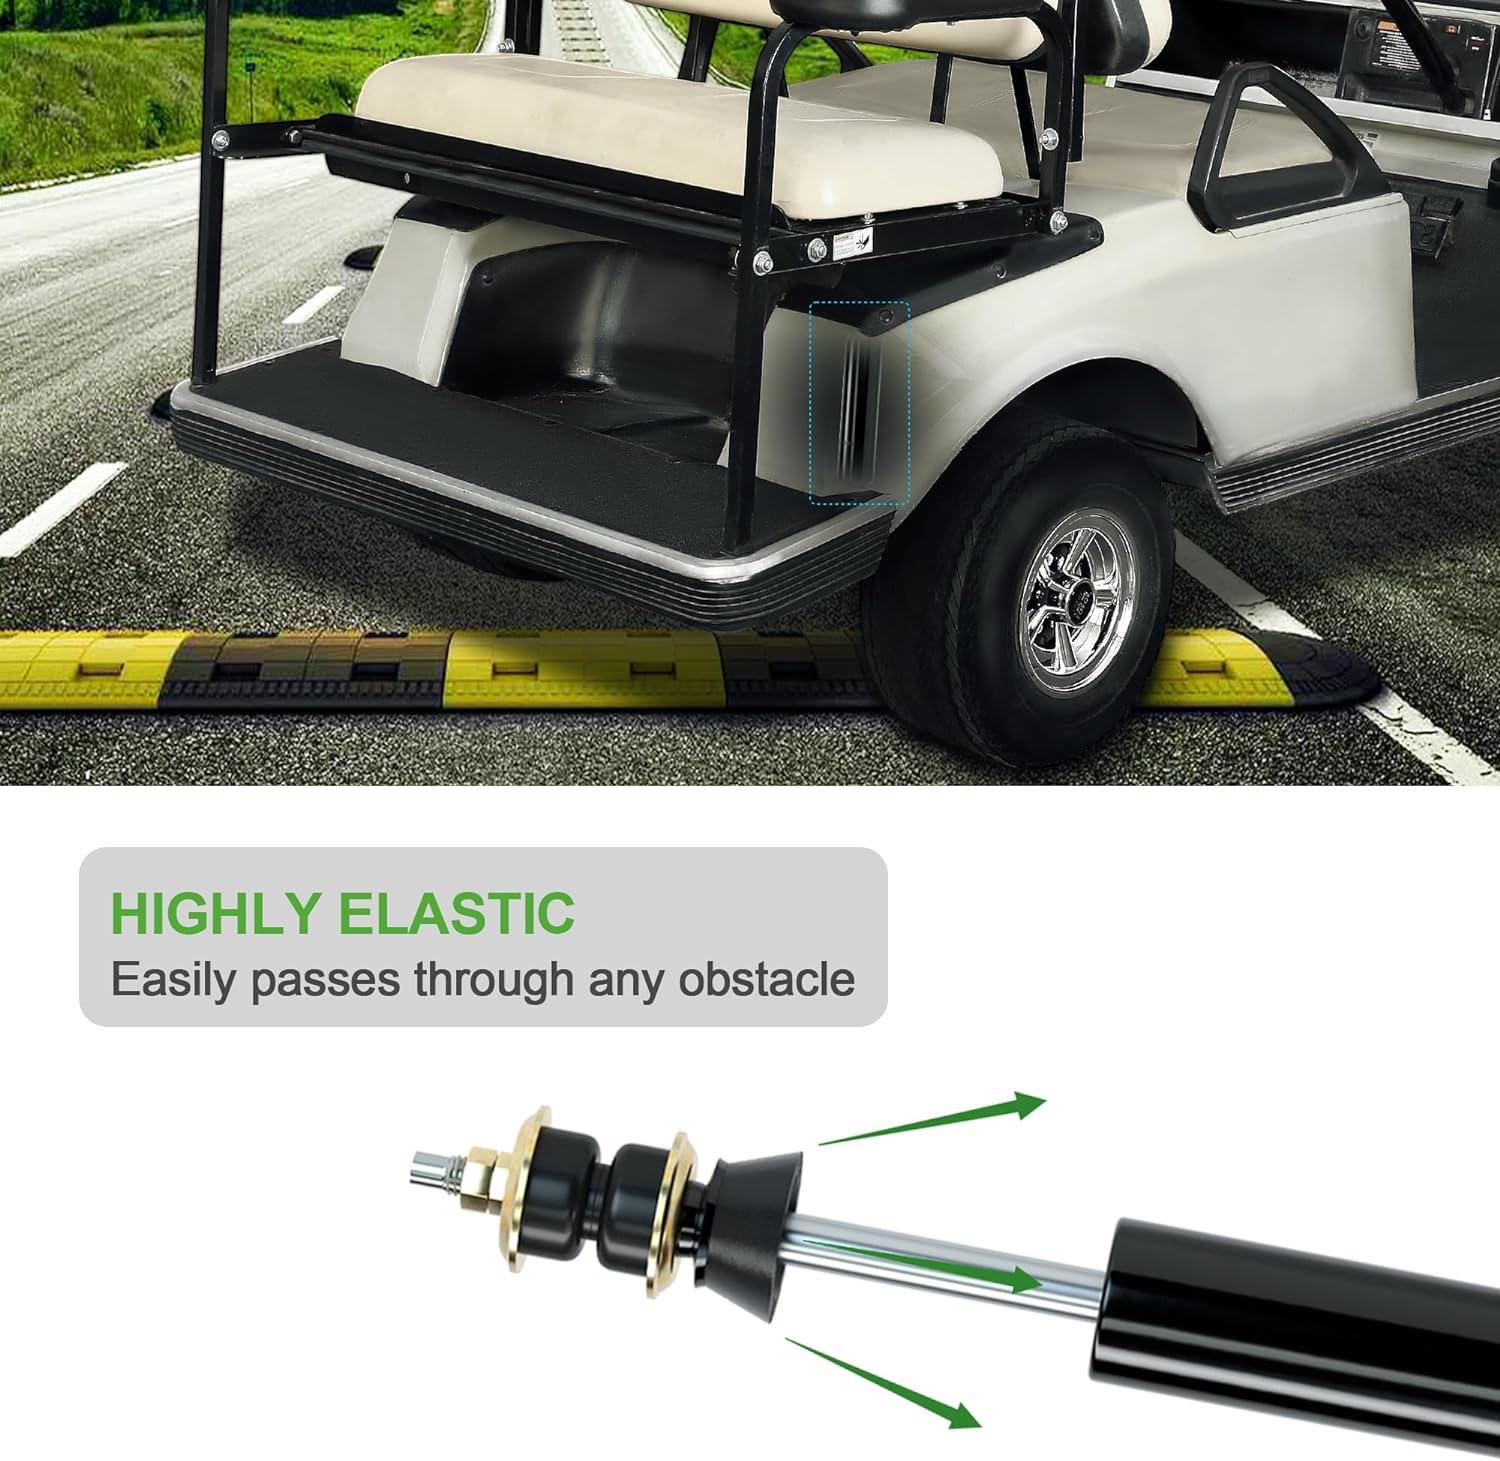 Golf Cart Rear Shocks Kit For Club Car DS Precedent - 10L0L Kryptex Golf Carts